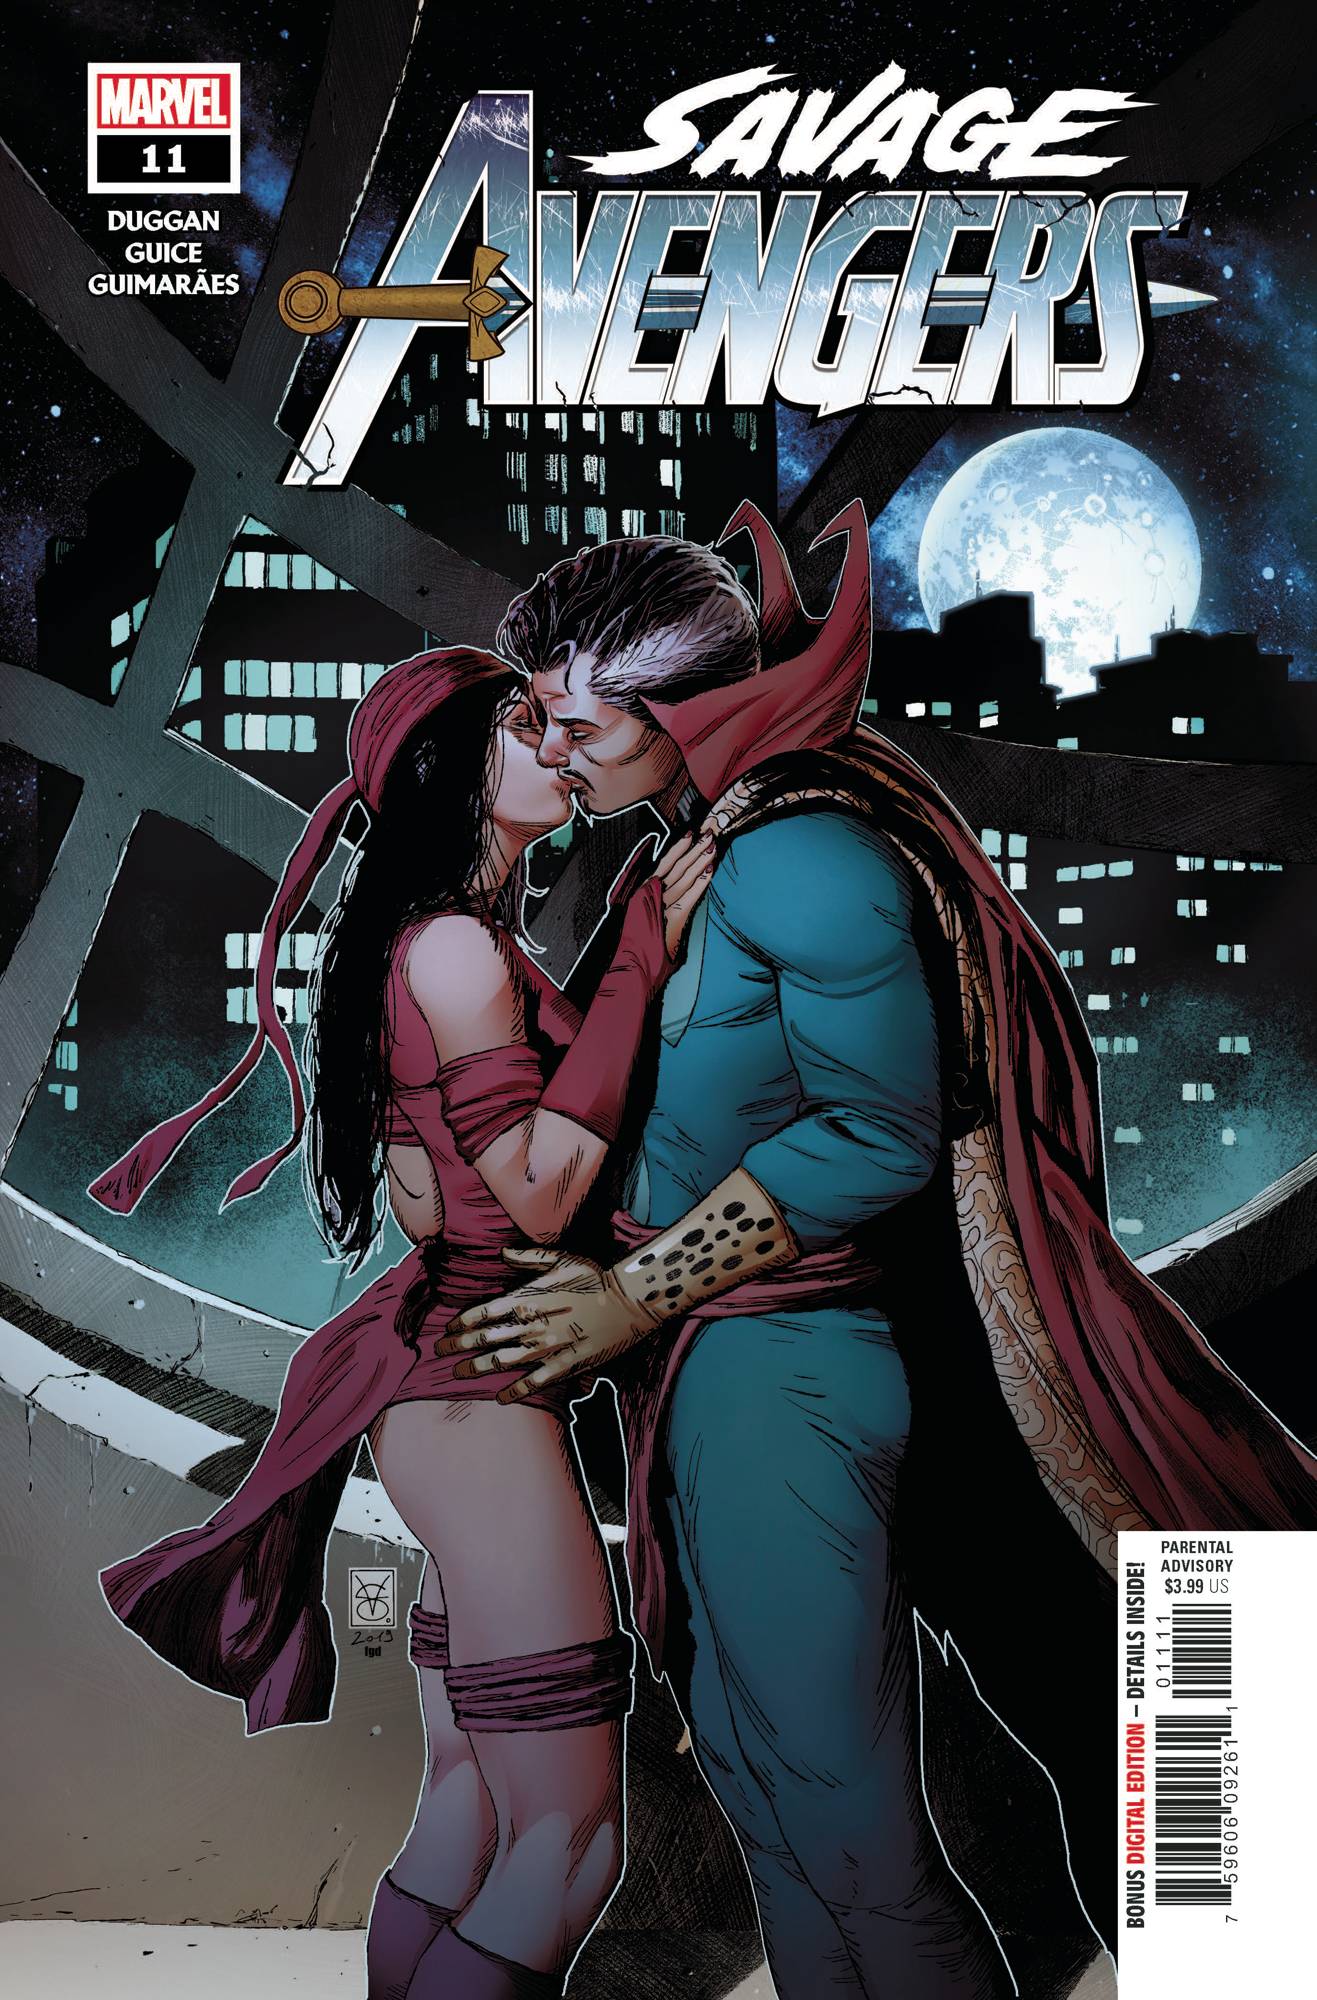 SAVAGE AVENGERS #11 Valerio Giangiordano Gerry Duggan Doctor Strange Elektra Kiss (03/04/2020) MARVEL